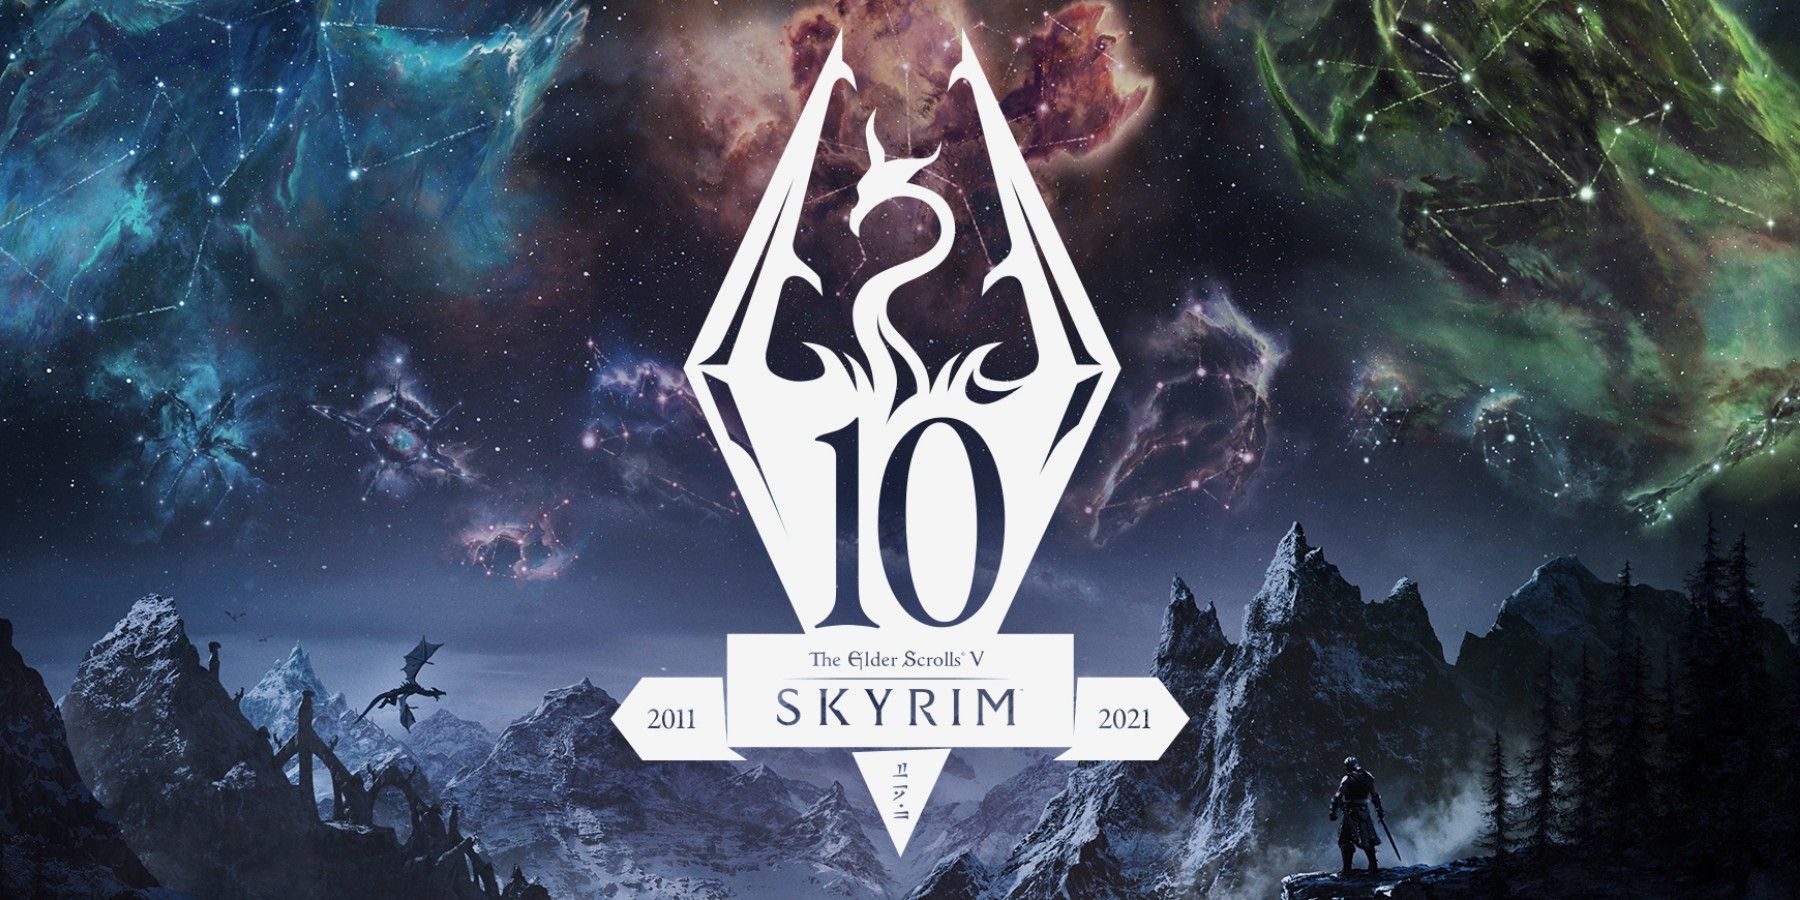 Skyrim Anniversary Edition and constellation